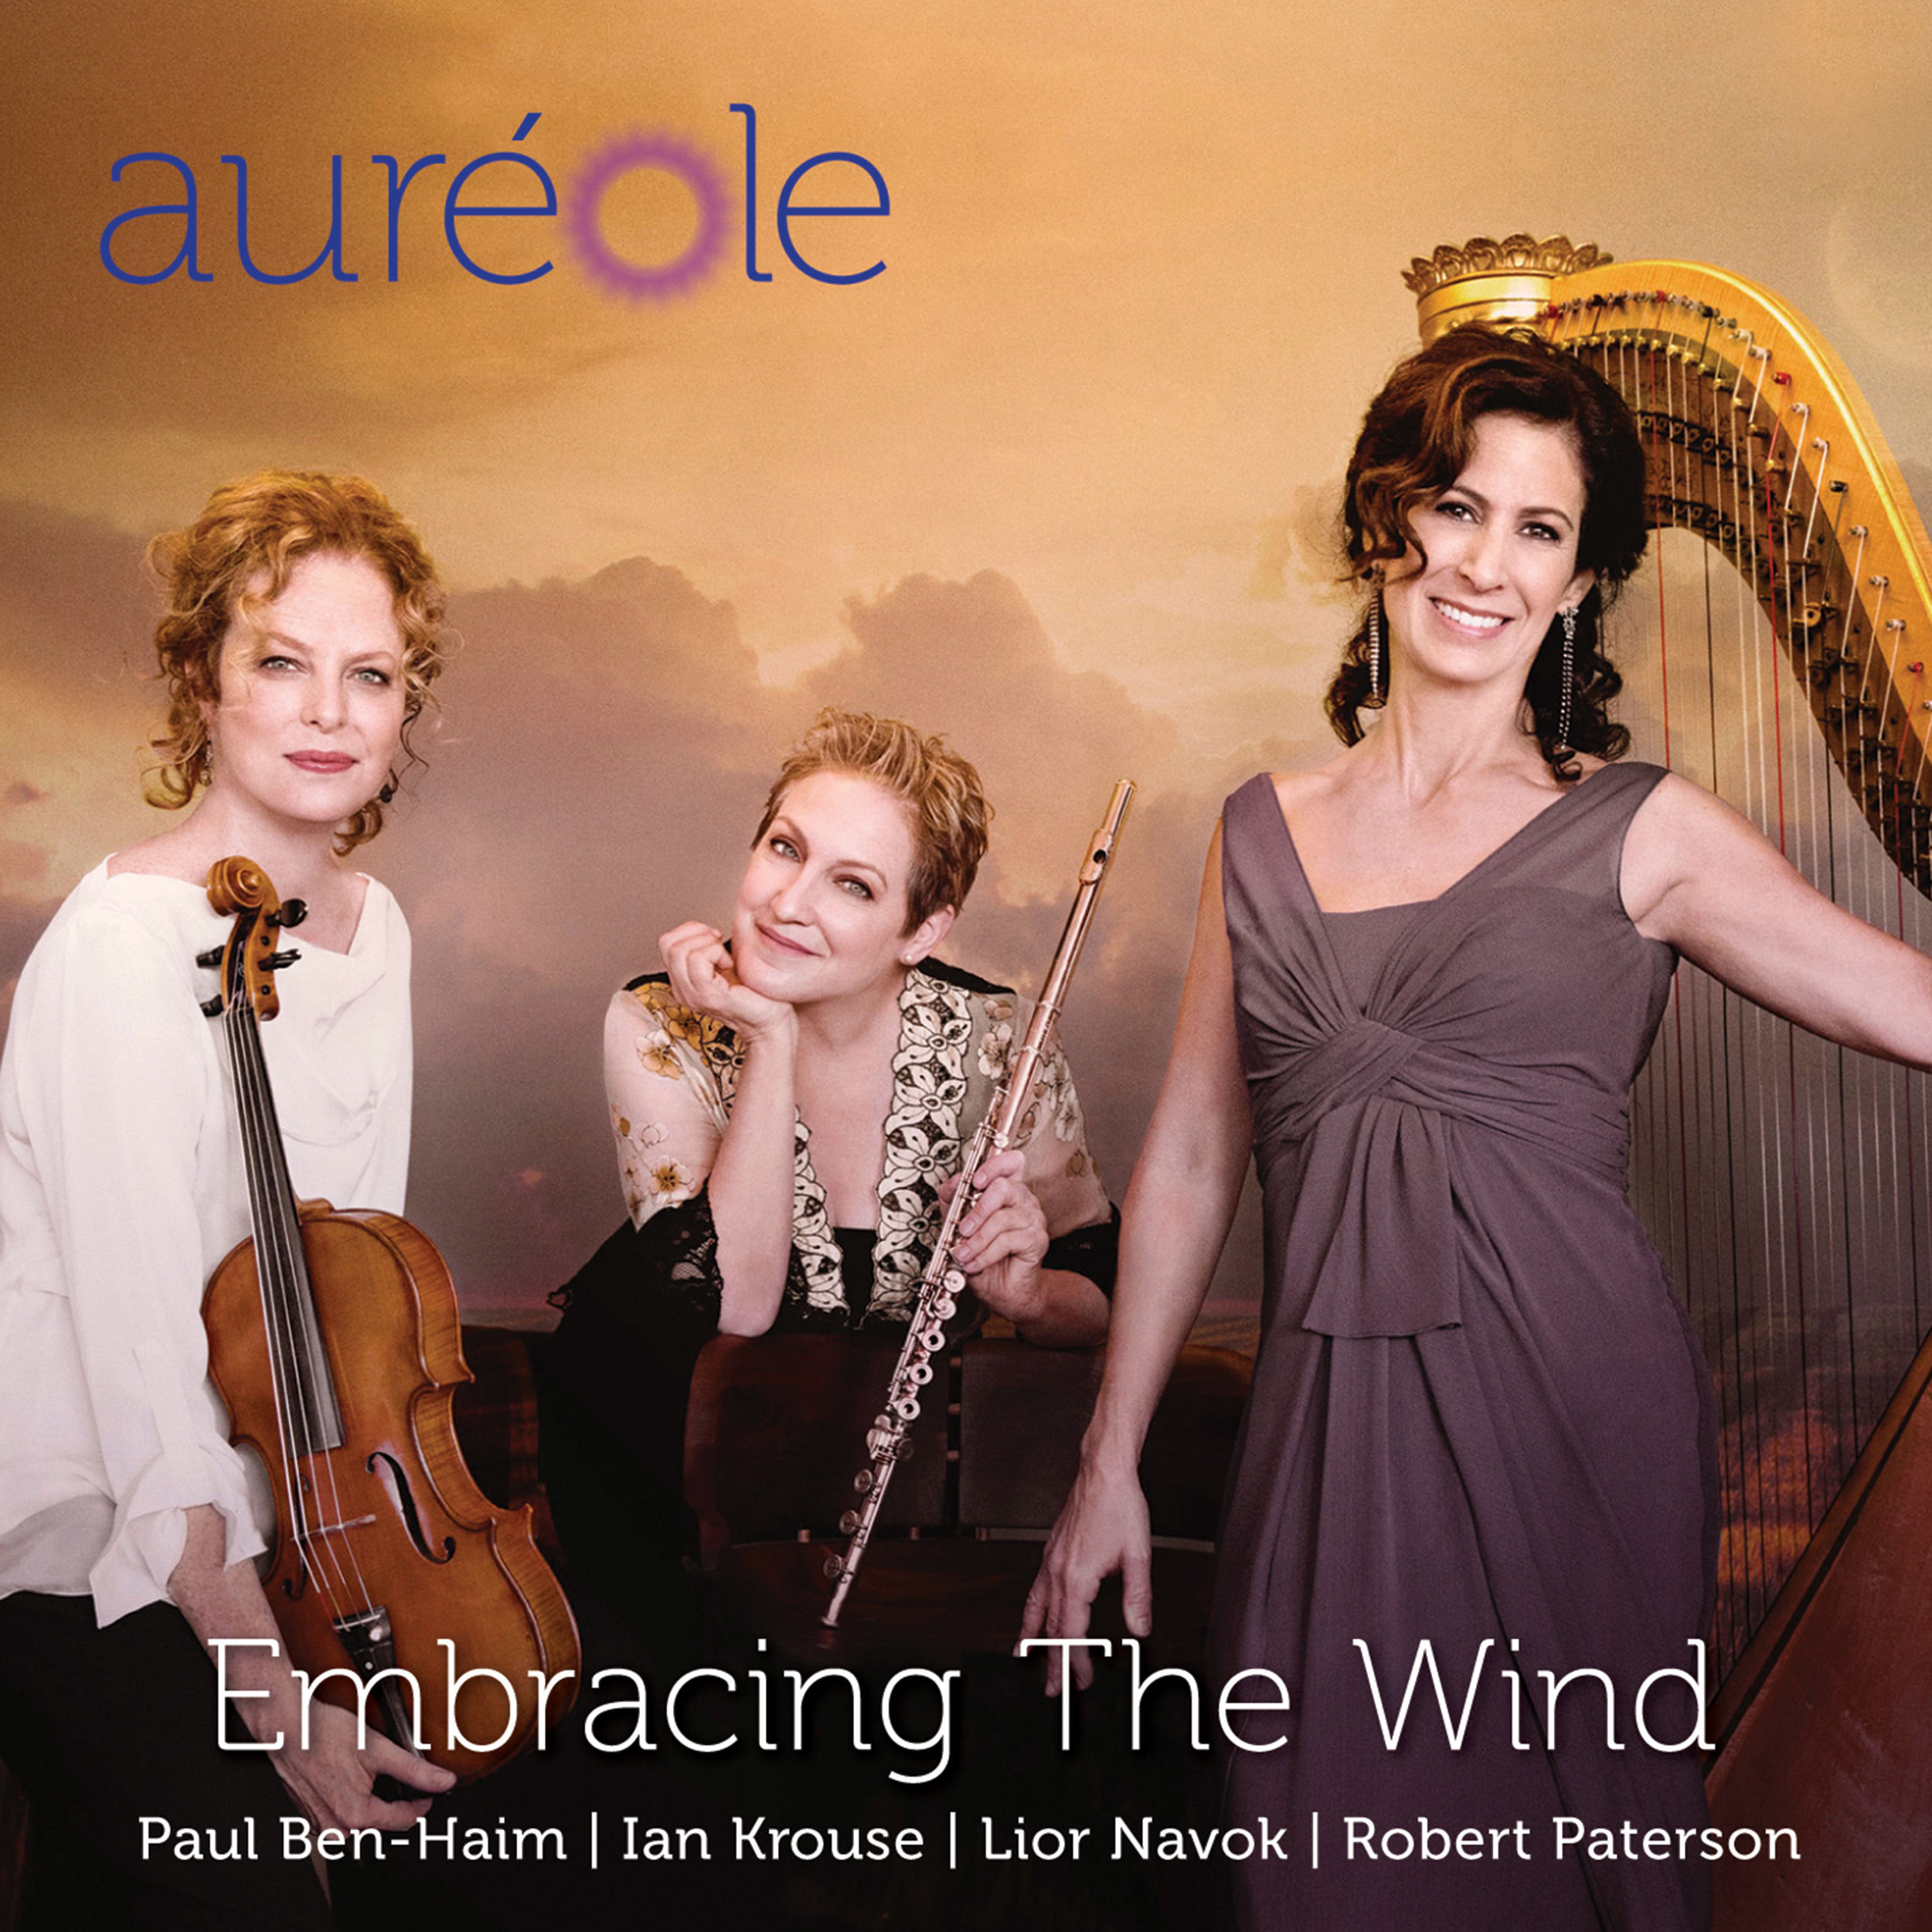 Auréole: Embracing The Wind